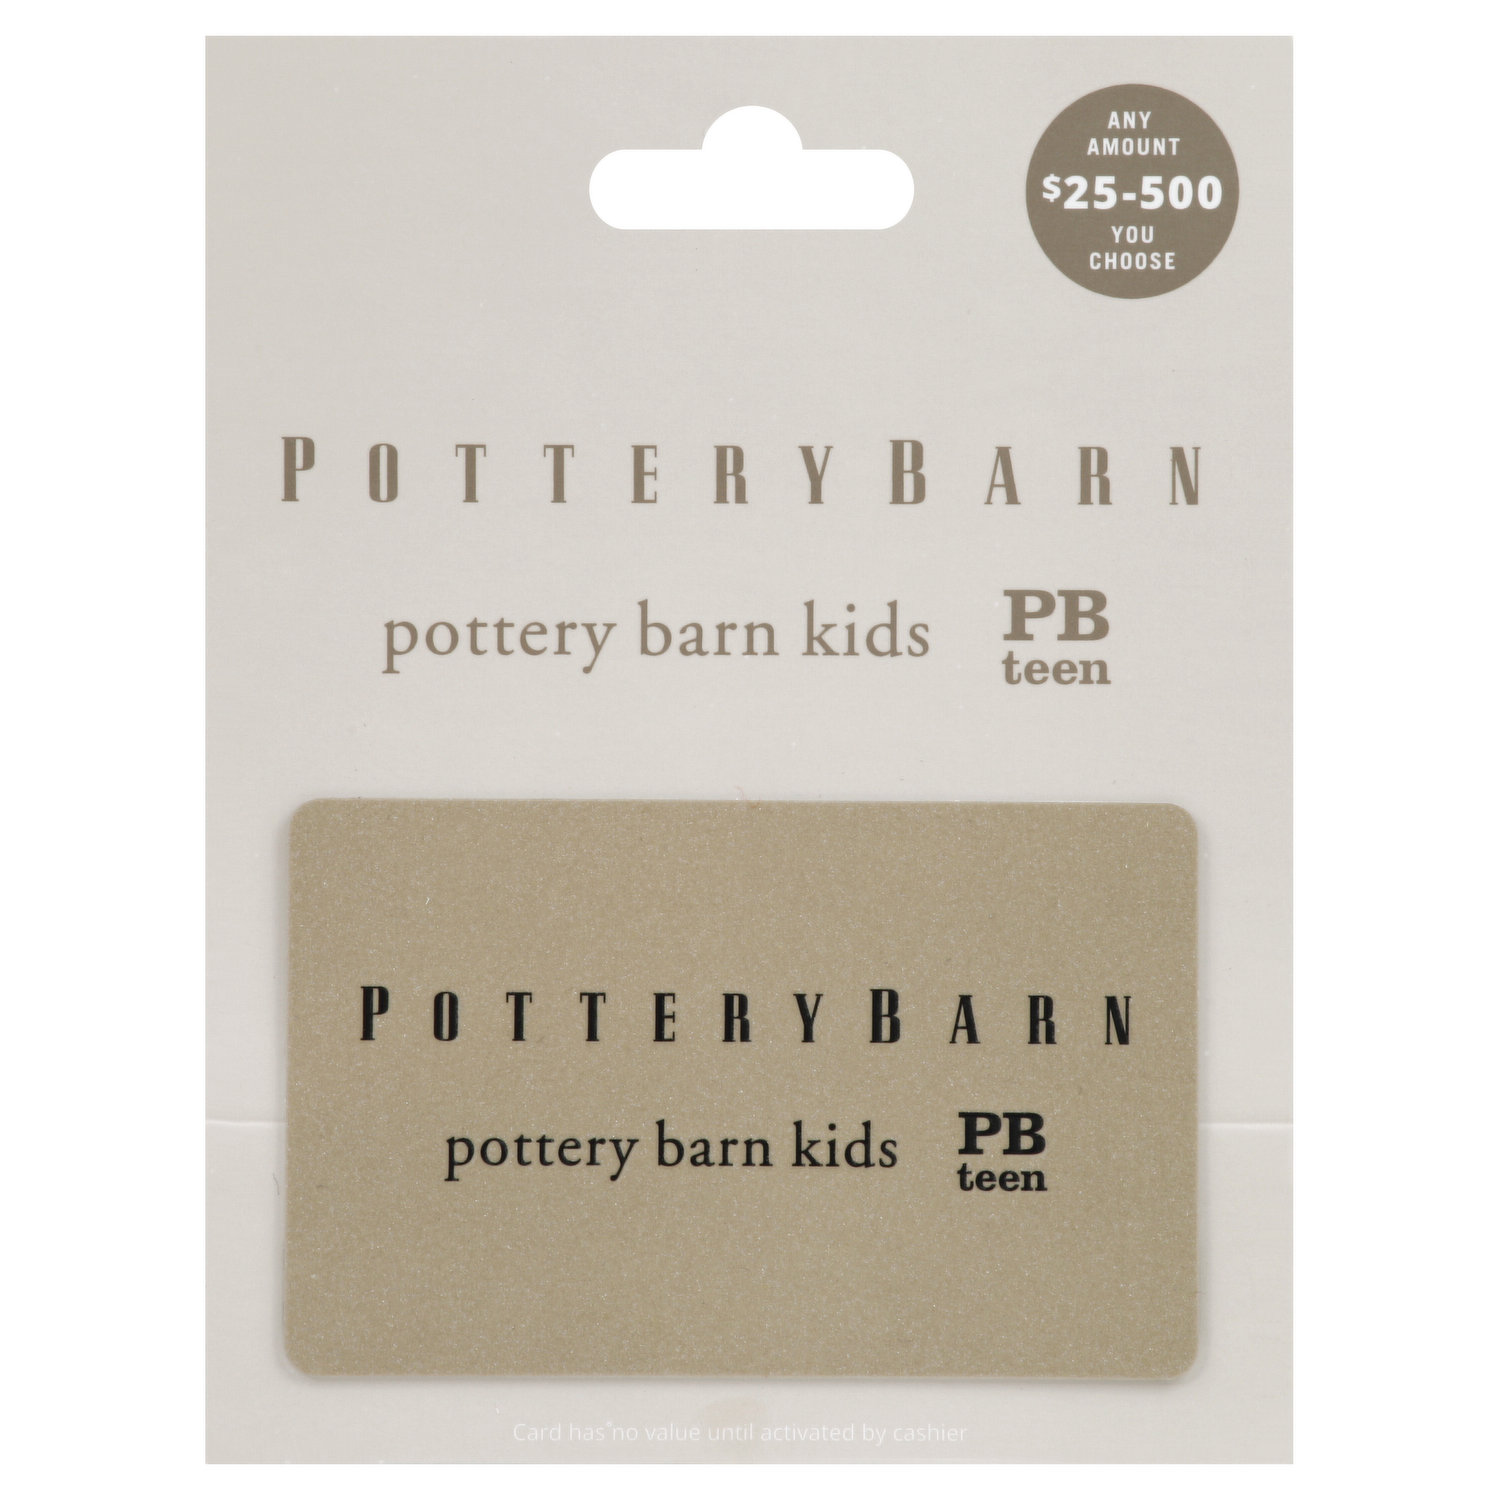 Pottery Barn Kids eGift Card